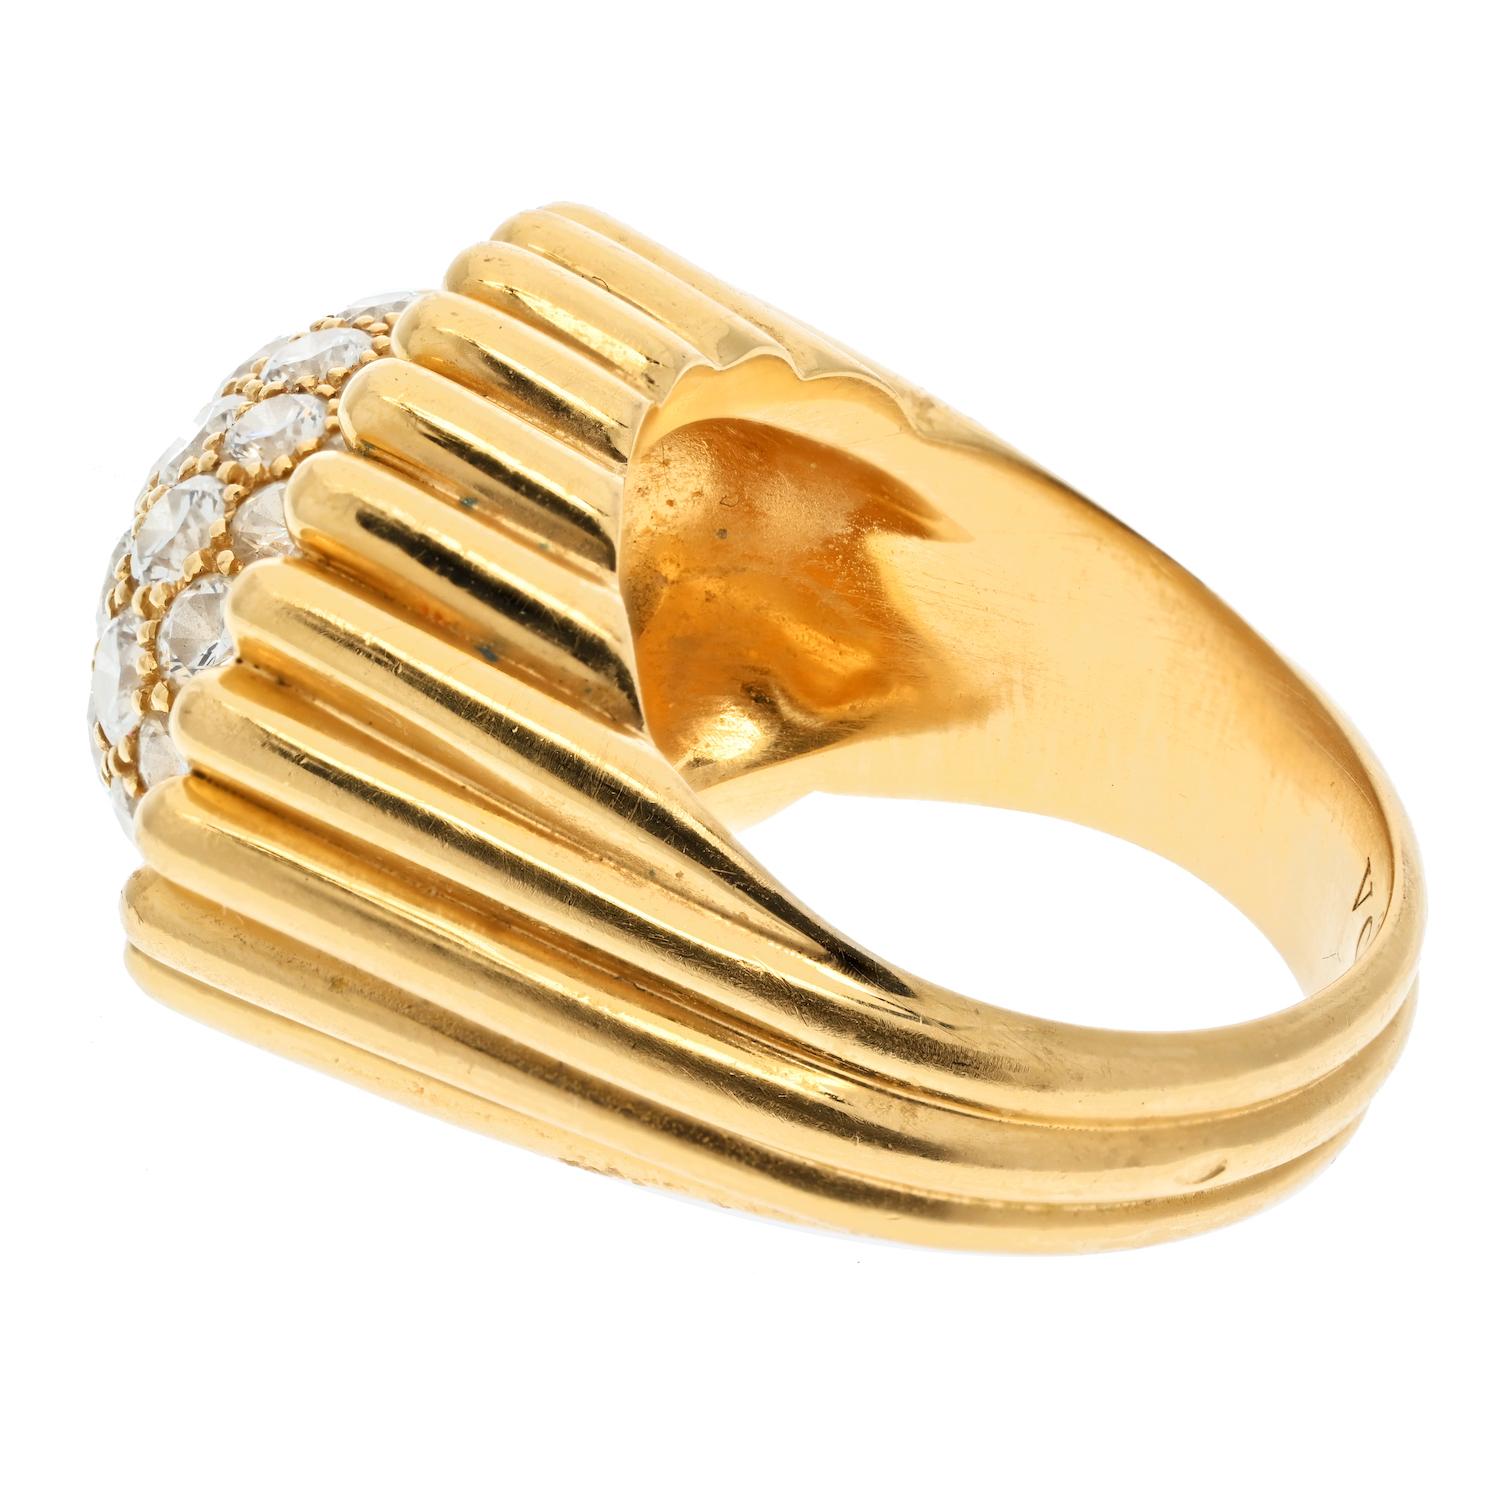 Modern Van Cleef & Arpels 18K Yellow Gold Perlee Pave Diamond Ring